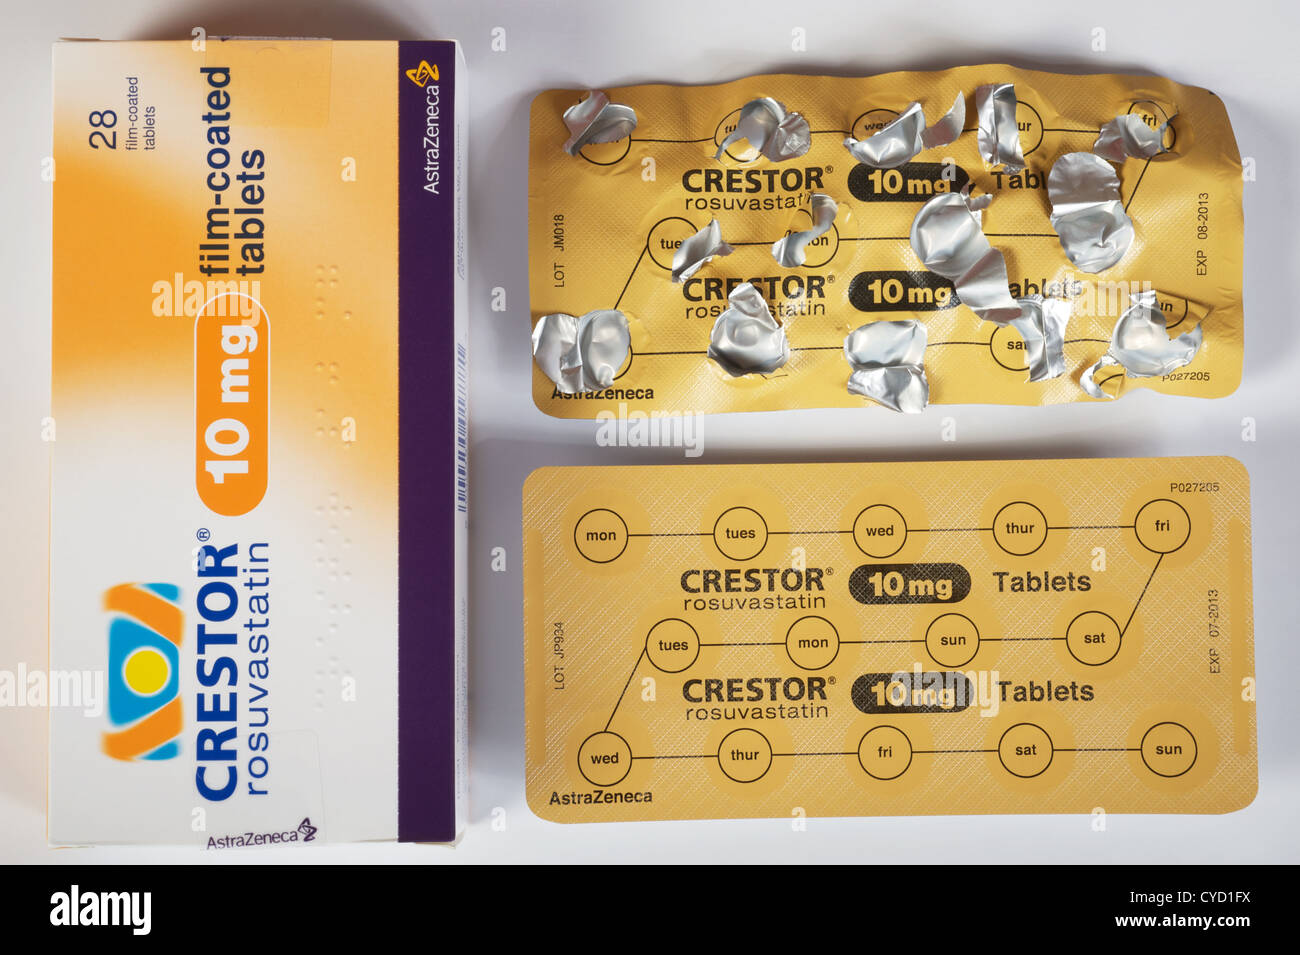 What is crestor rosuvastatin 10 mg astrazeneca